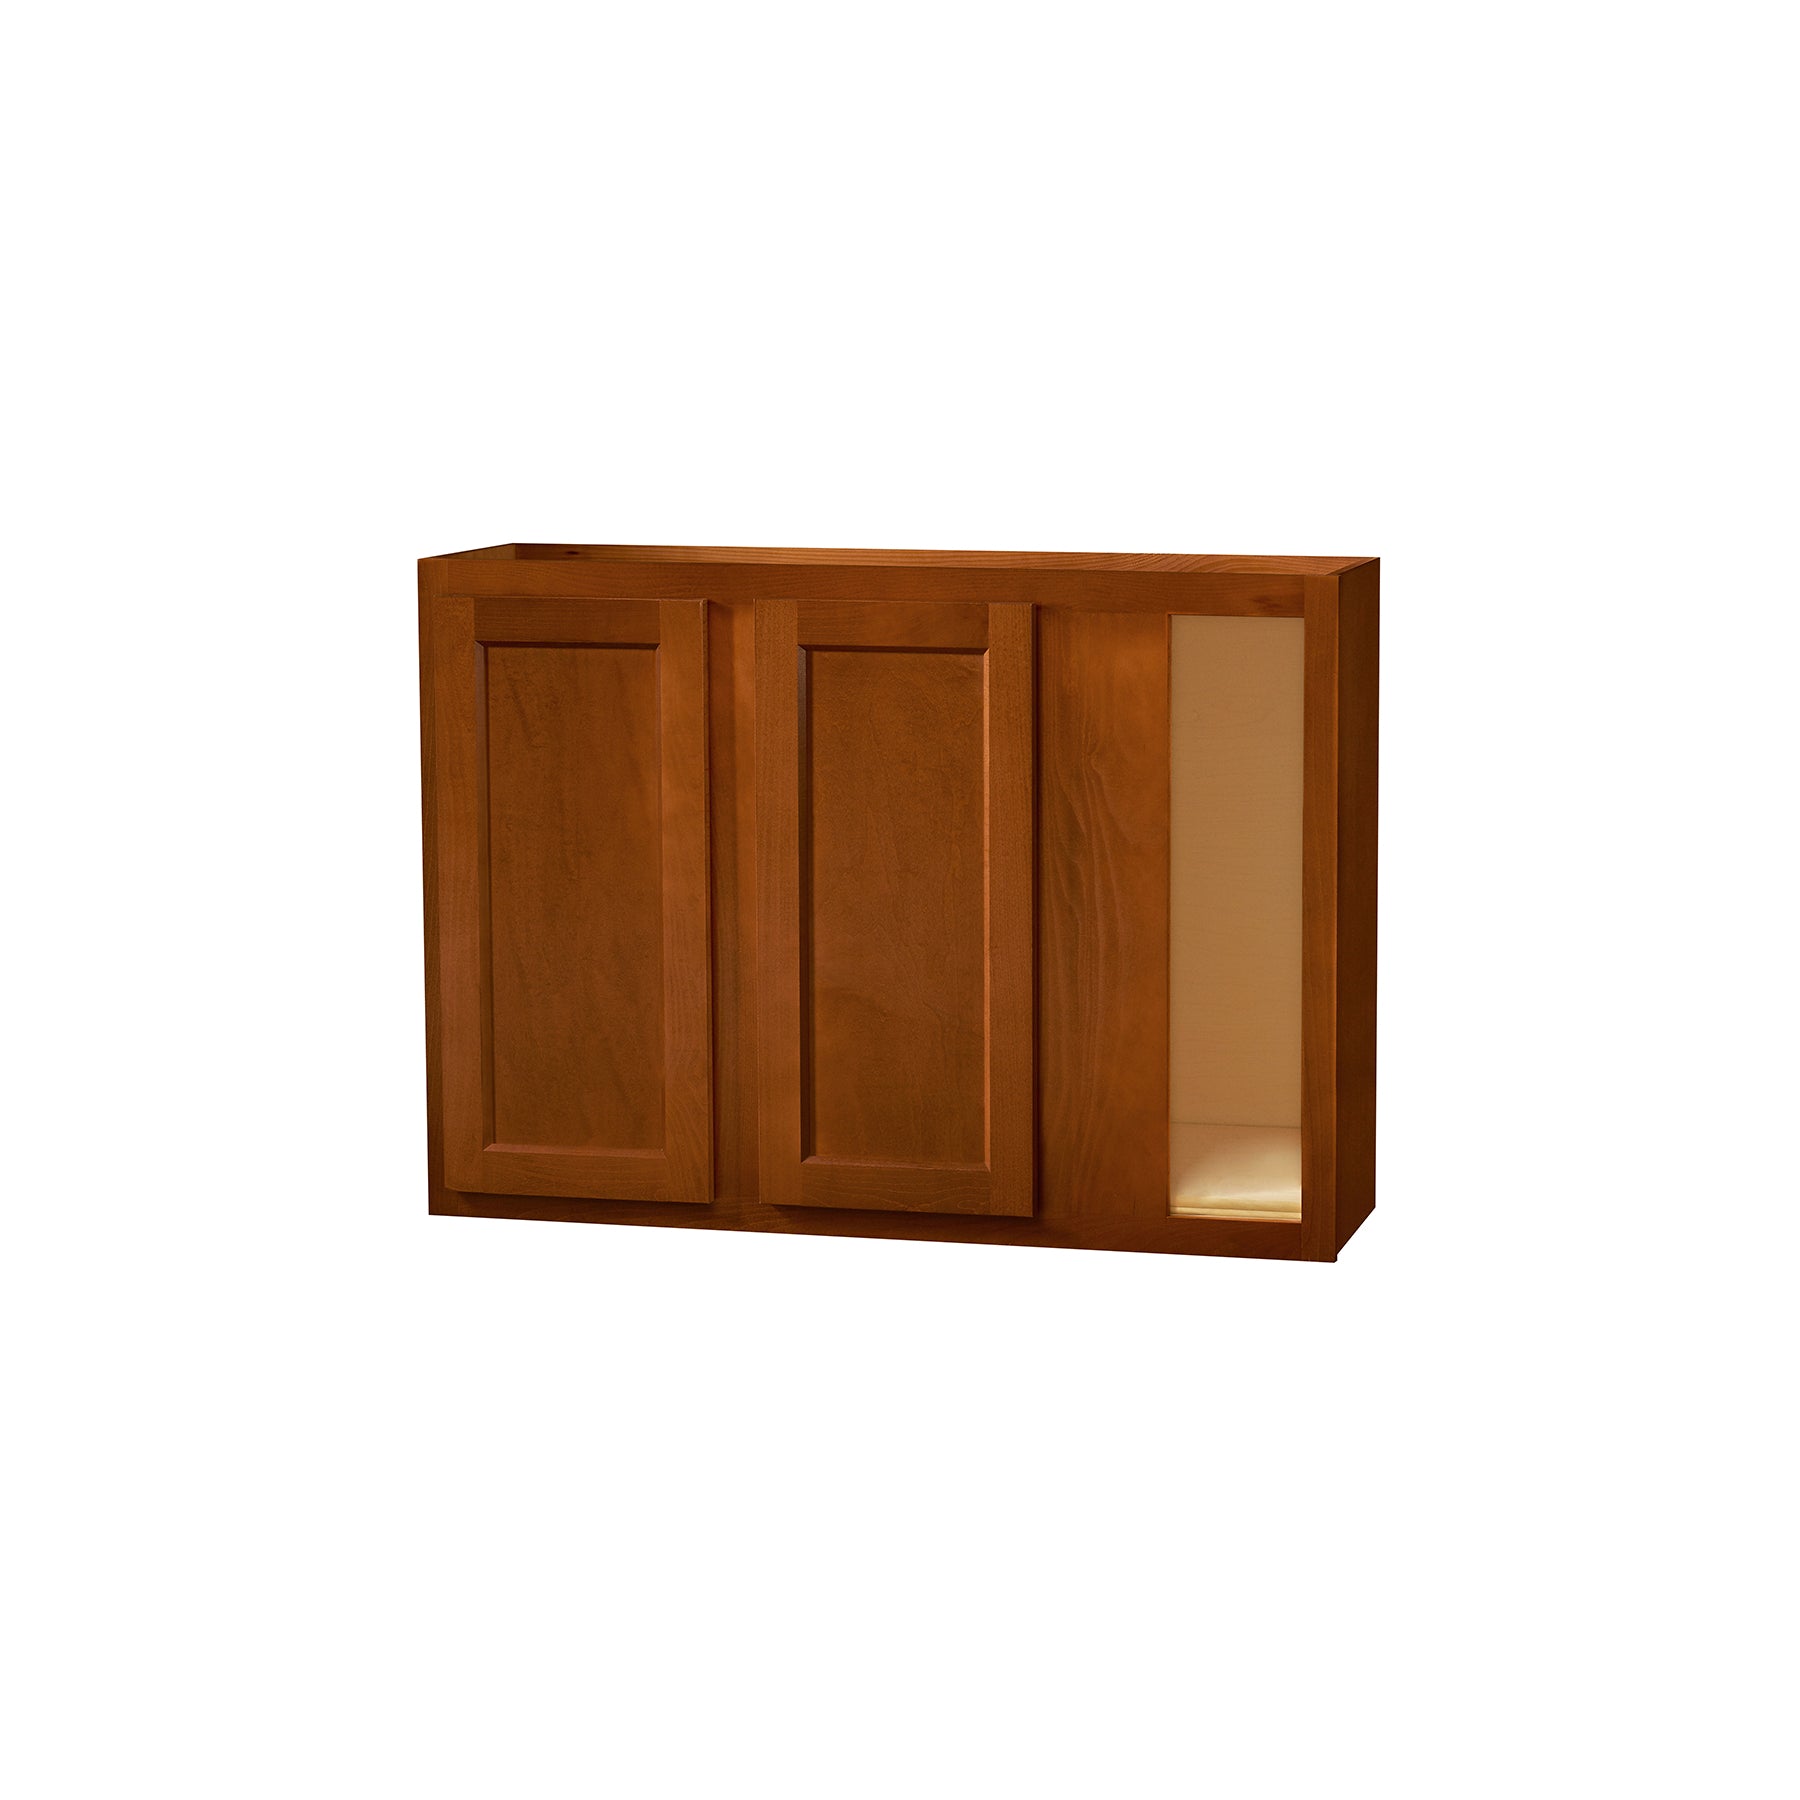 30 inch Wall Corner Cabinet - Glenwood Shaker - 42 Inch W x 30 Inch H x 12 Inch D